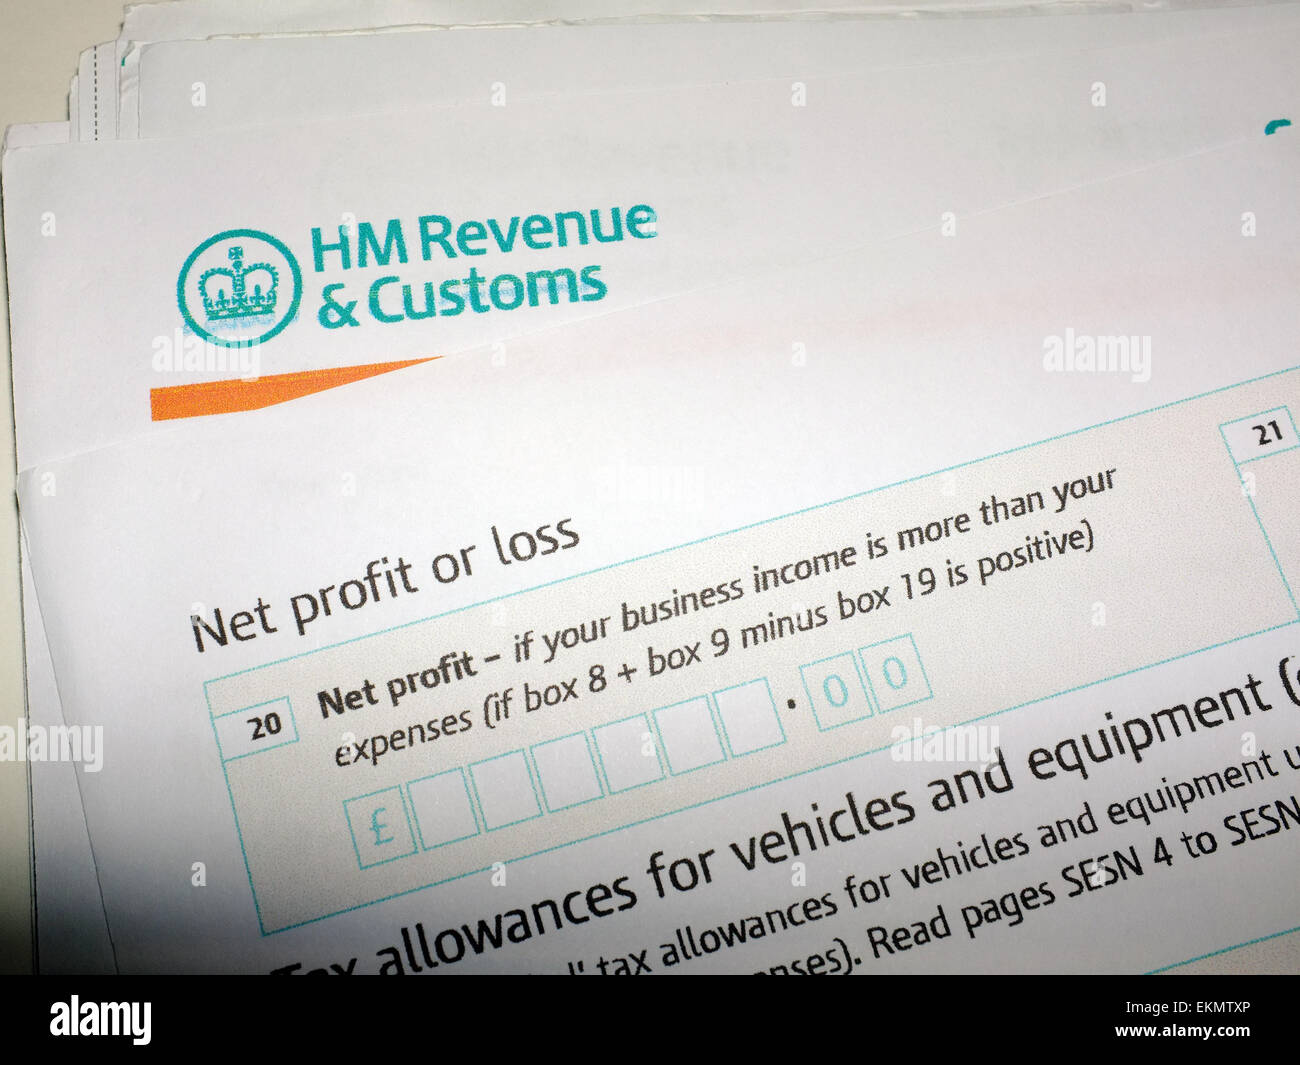 Ring Hm Revenue For Tax Rebate